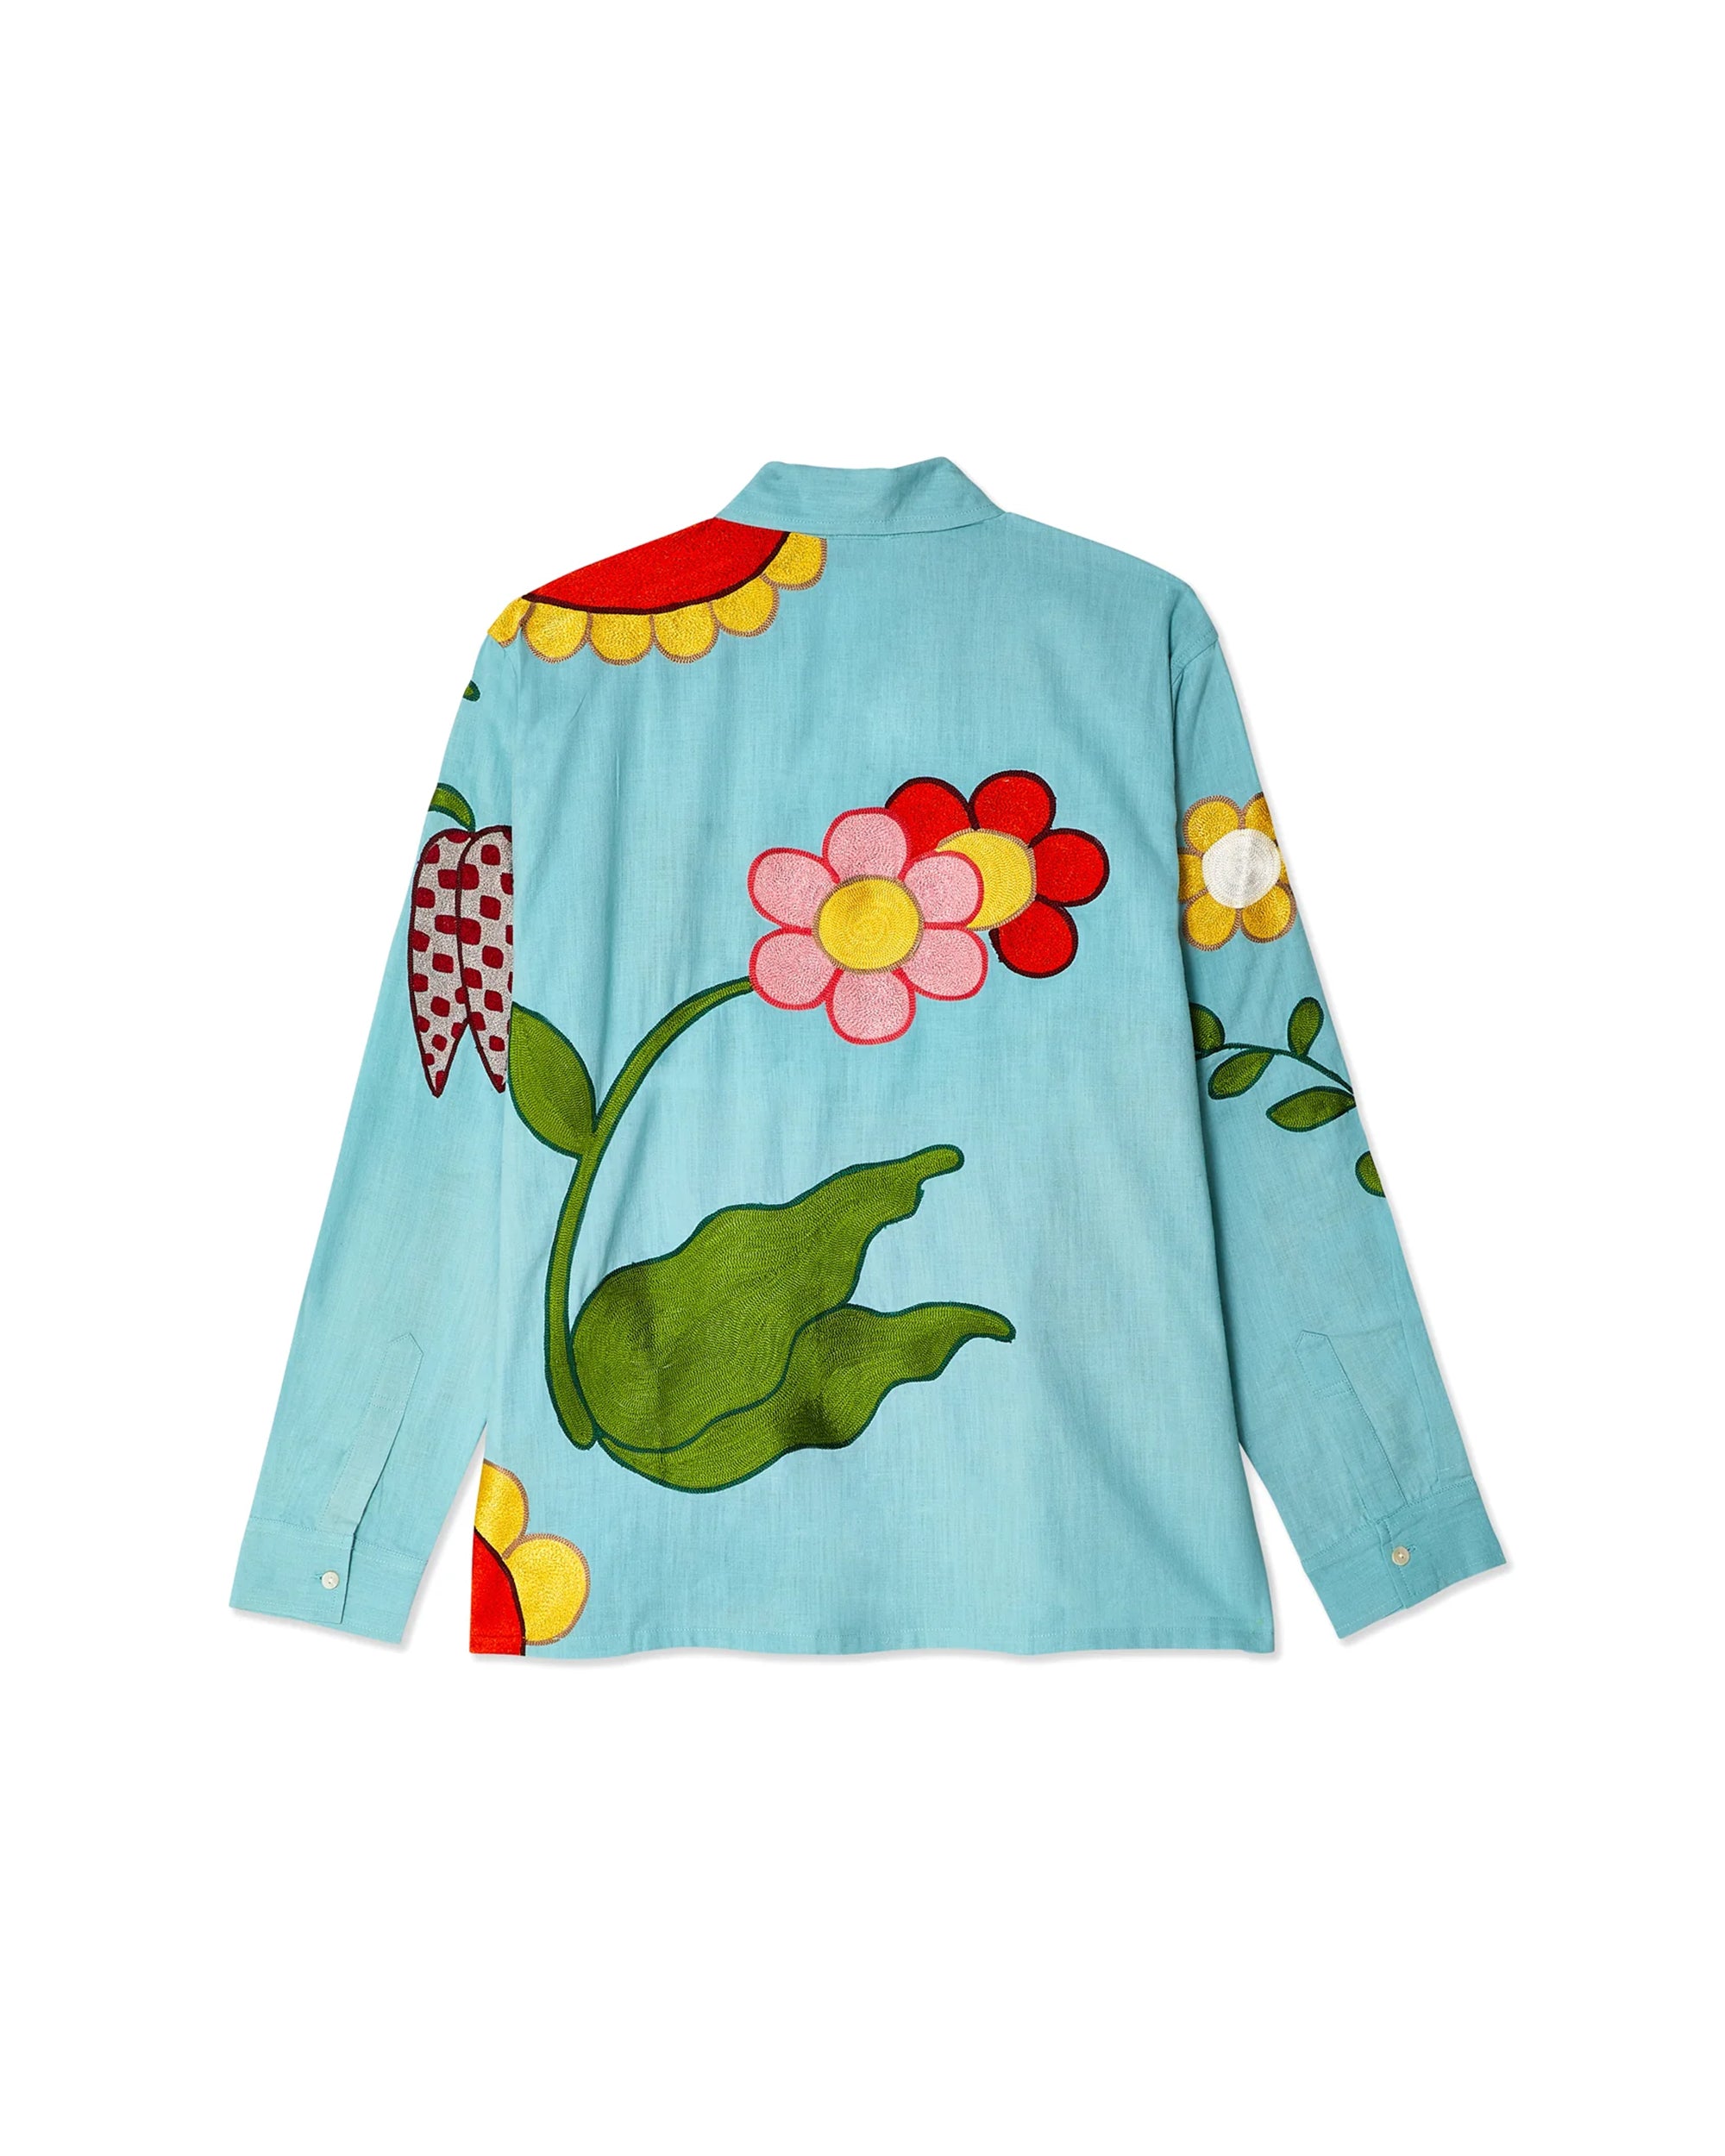 Boticelli Embroidered Flower Shirt - Light Blue